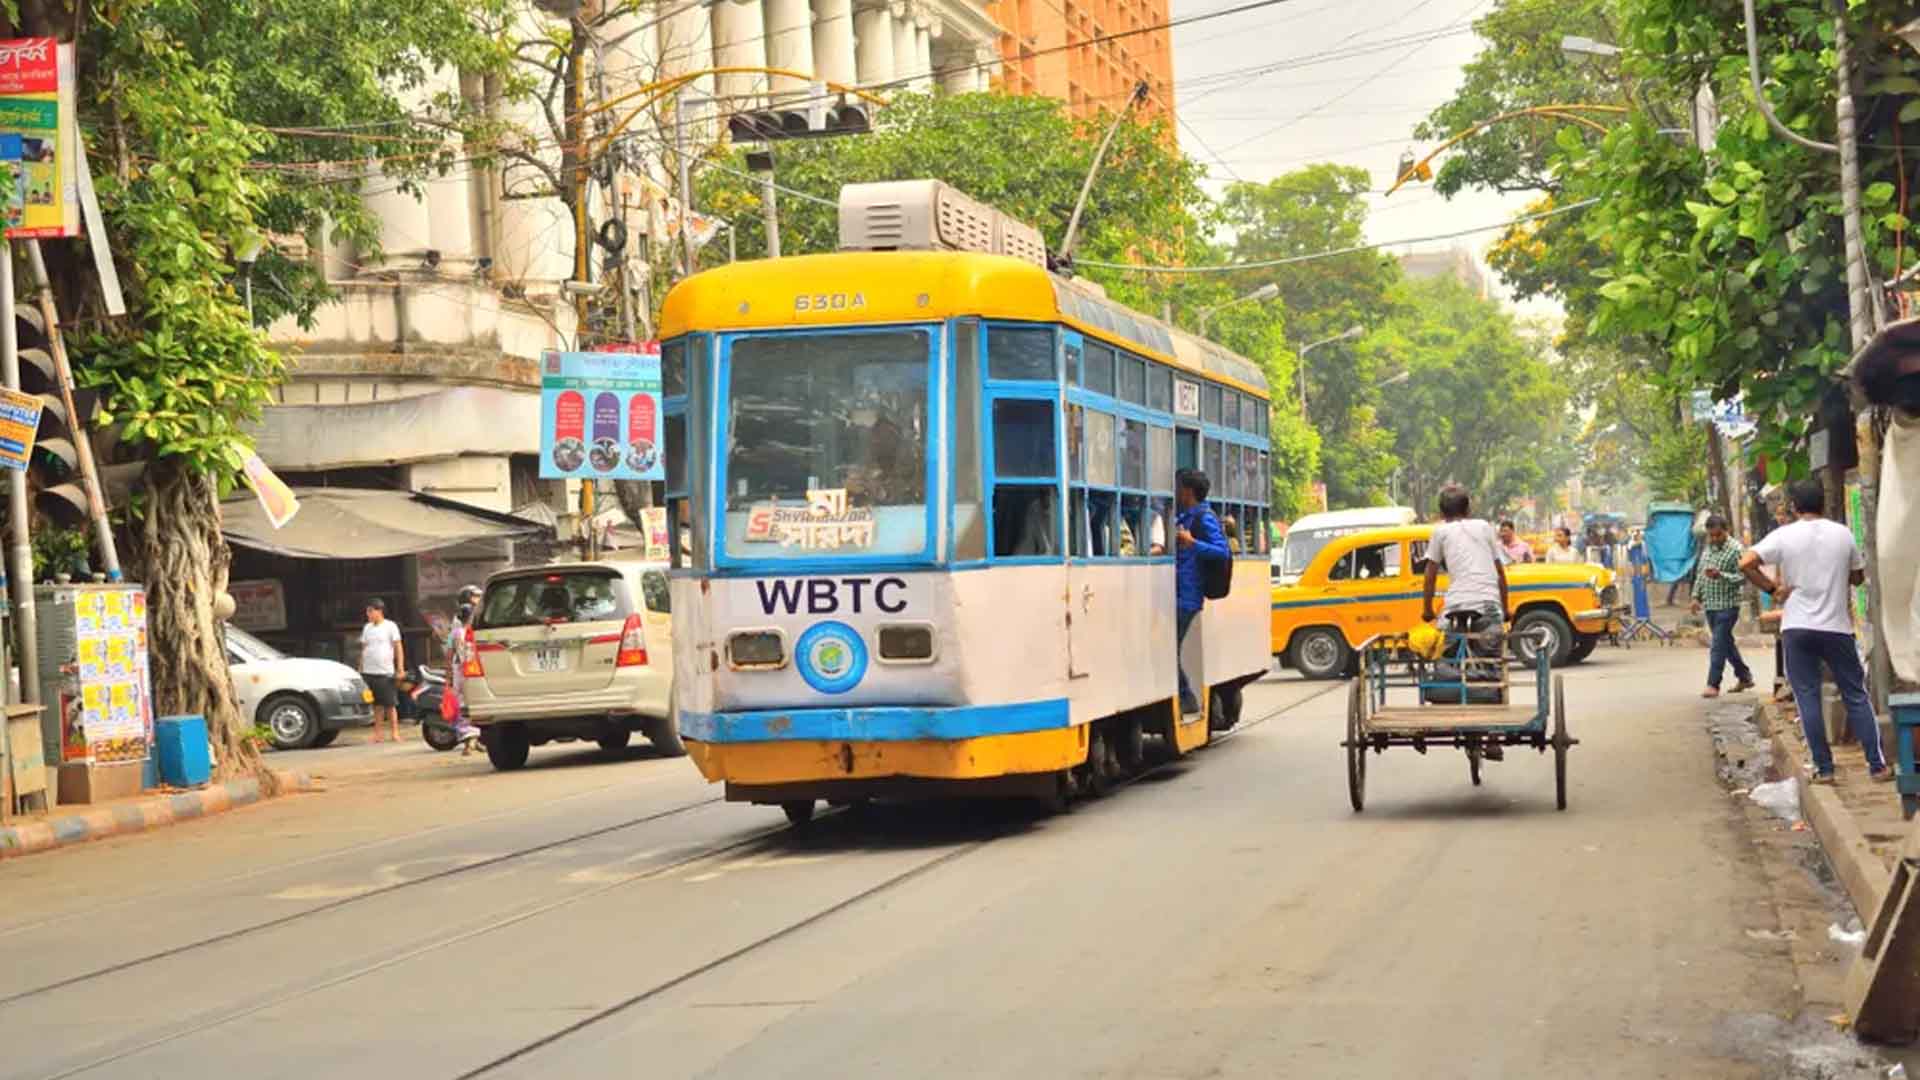 tram ride, ডায়াবেটিস, Kolkata : কলকাতার ১৪ টি দর্শনীয় স্থান, যেখানে না গেলে বাকি থেকে যায় এই শহরকে চেনা!